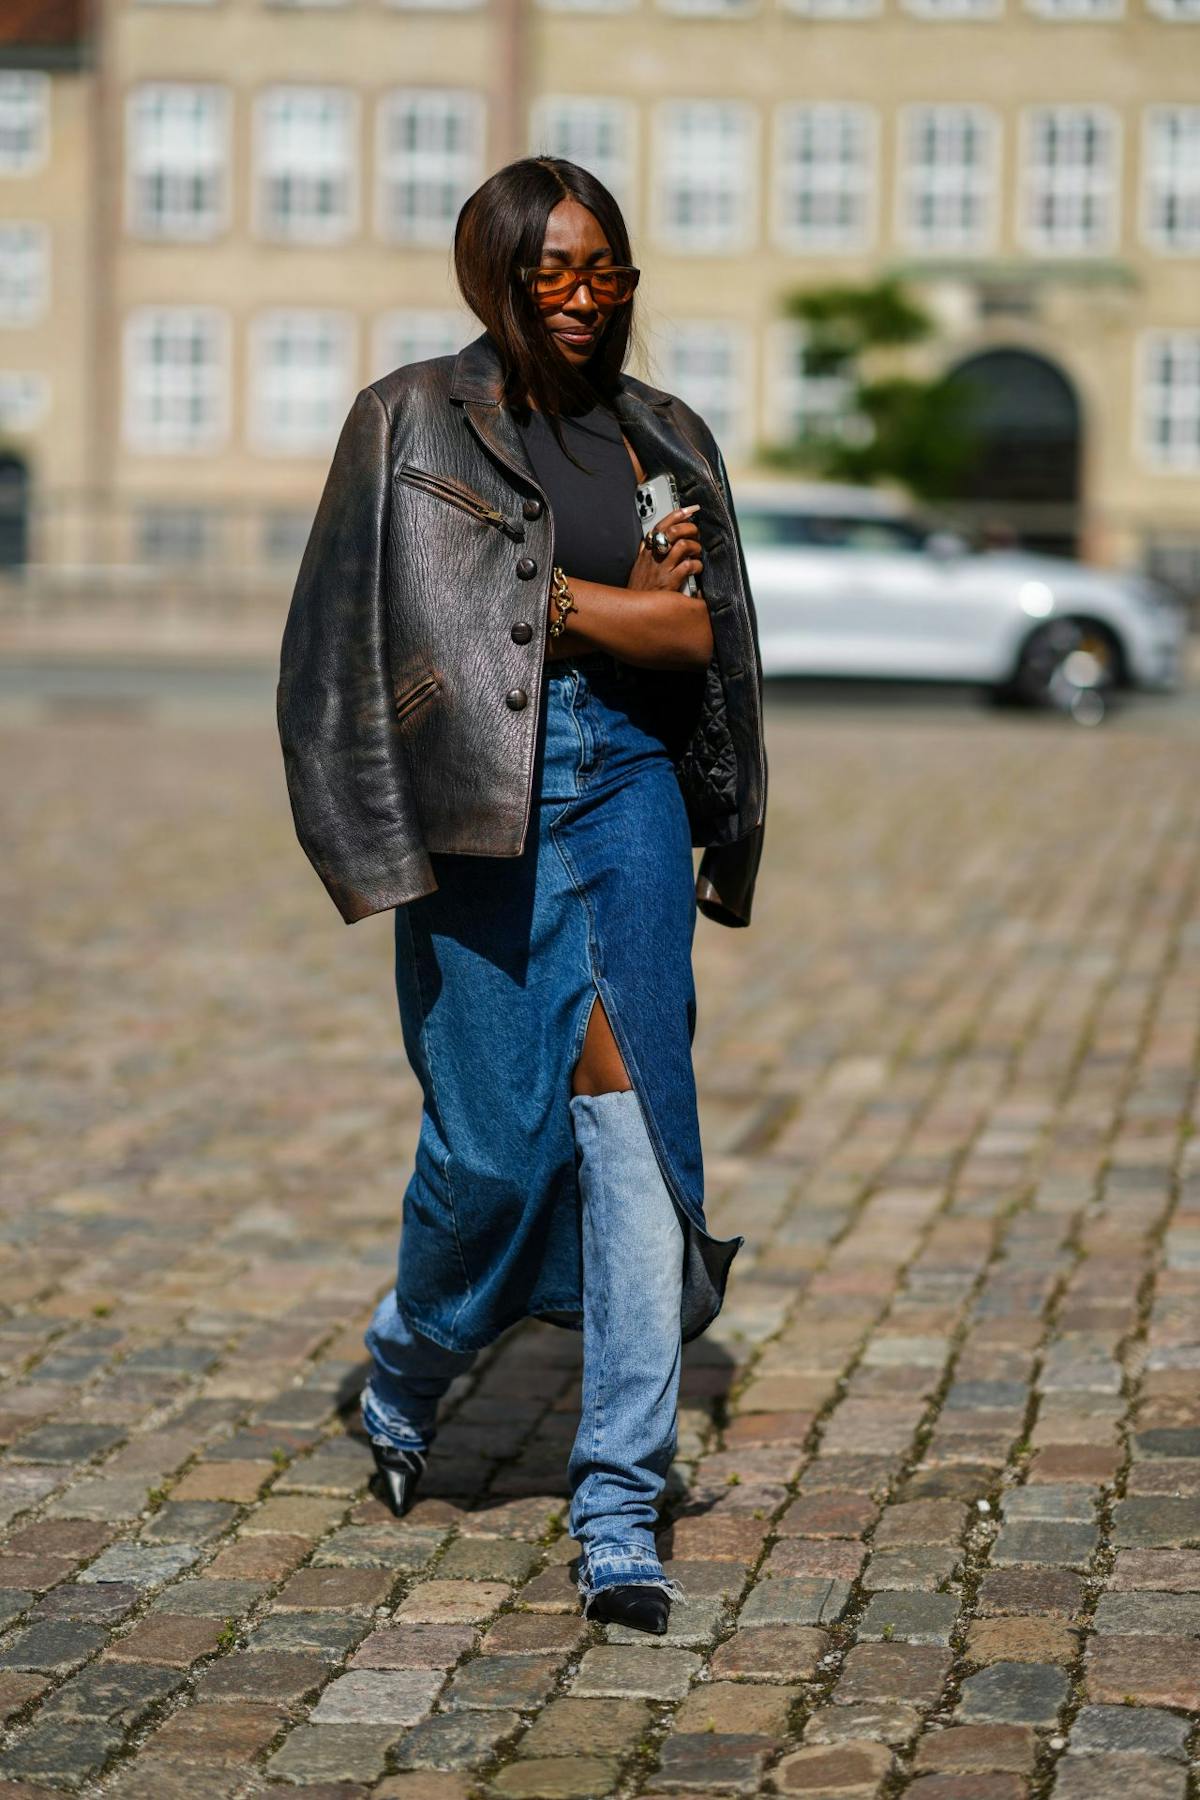 Copenhagen Fashion Week: legwarmers are coming back